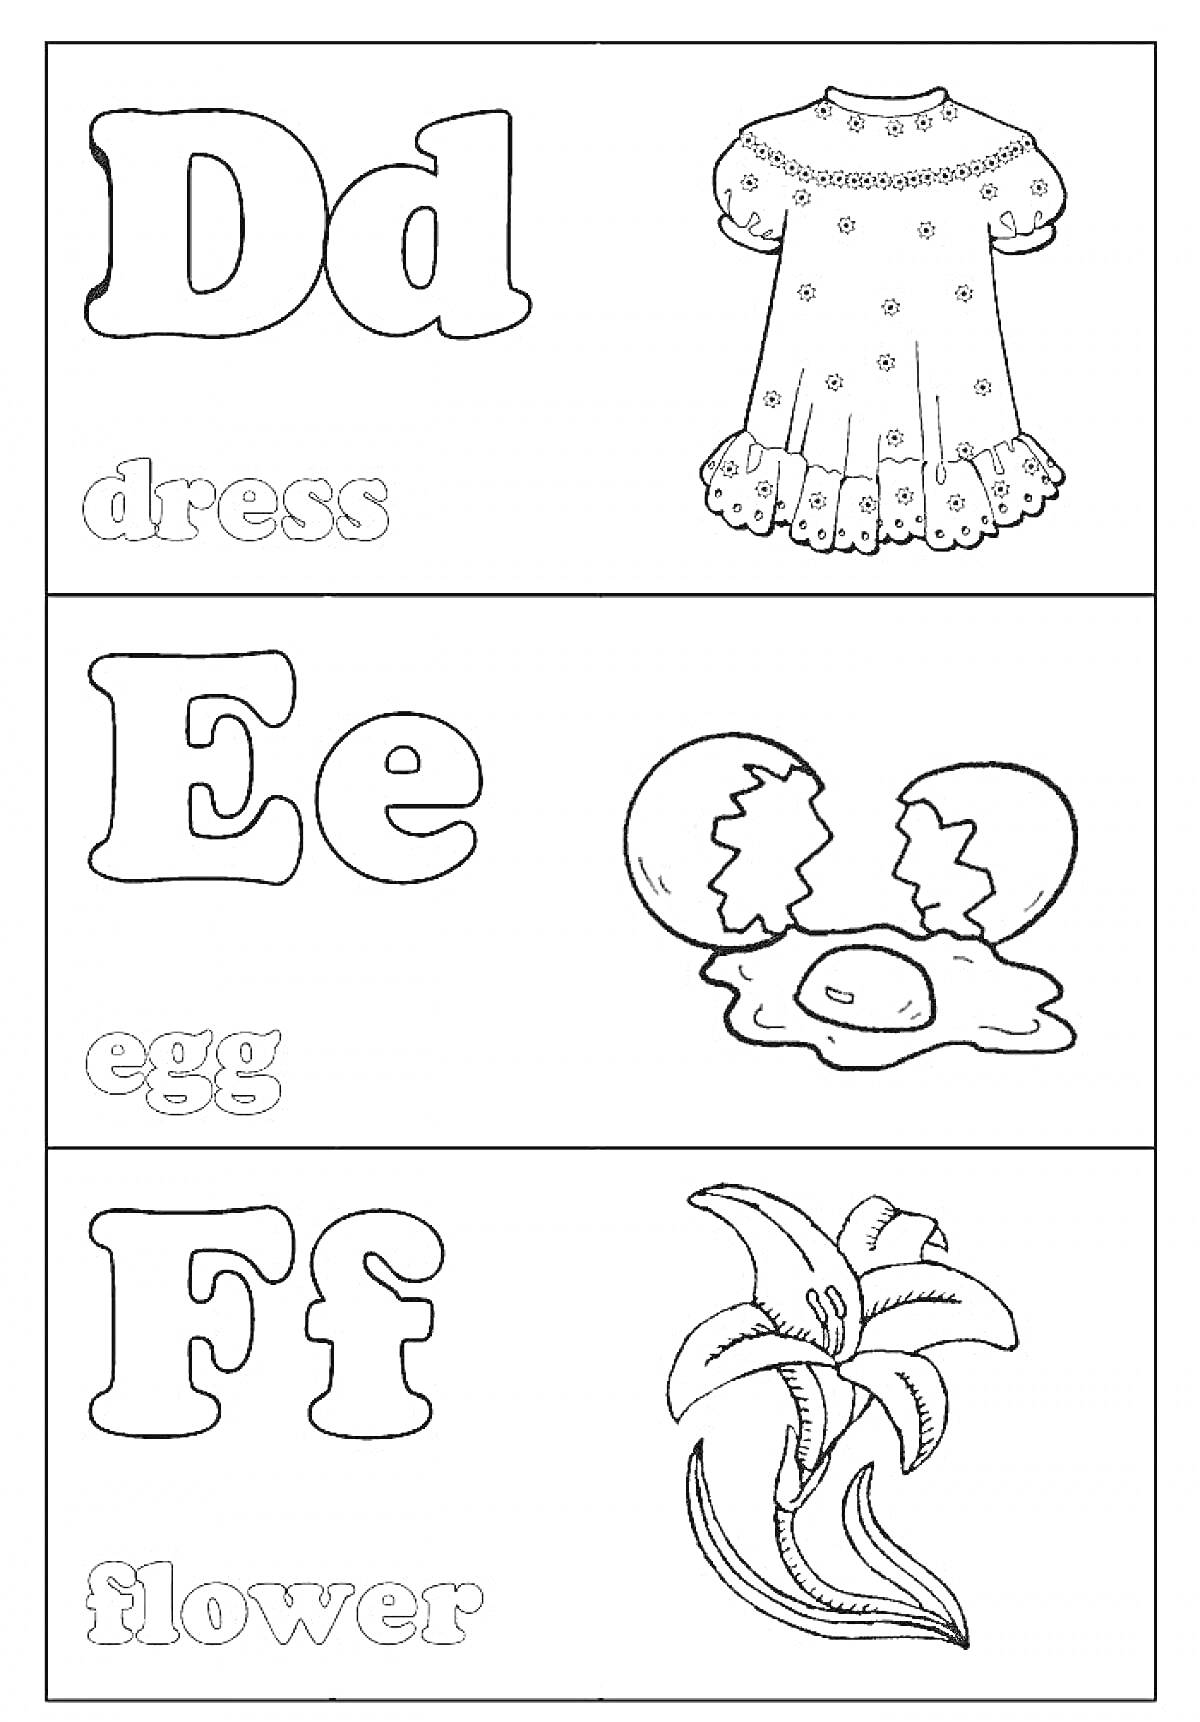 Английский алфавит - Dd: платье, Ee: яйцо, Ff: цветок